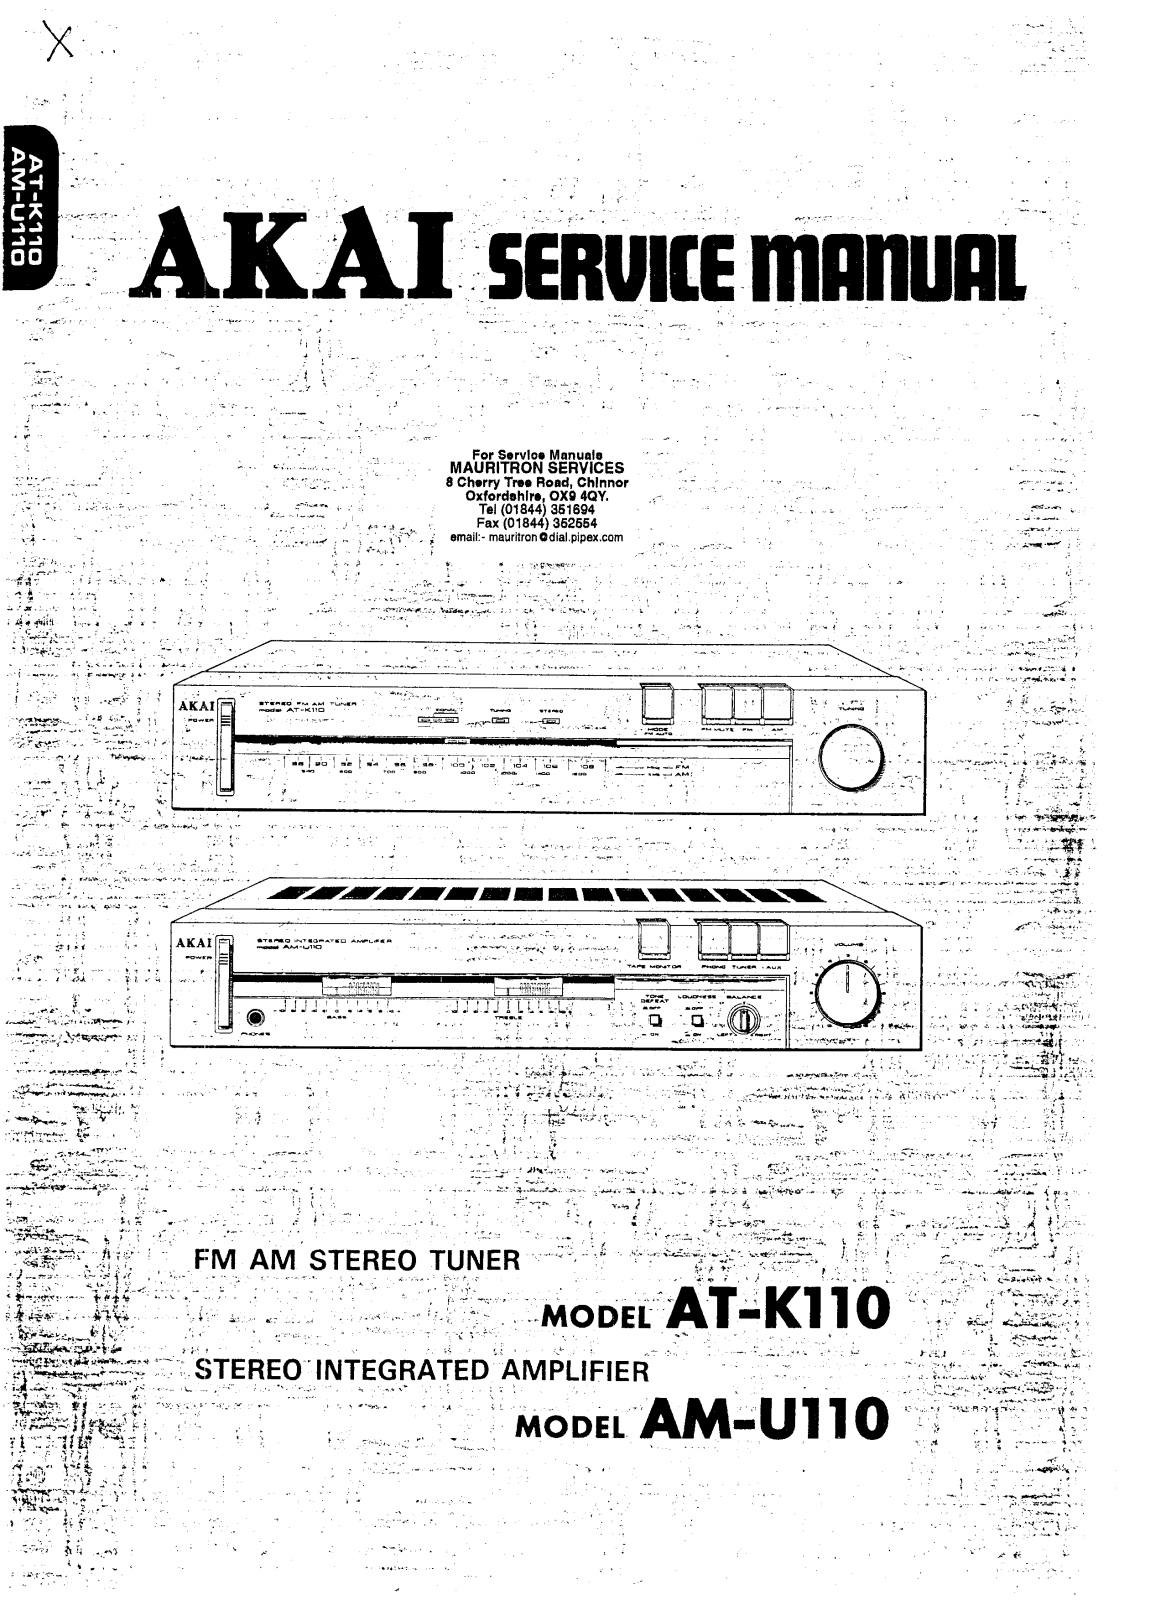 Akai AMU-110, ATK-110 Service manual